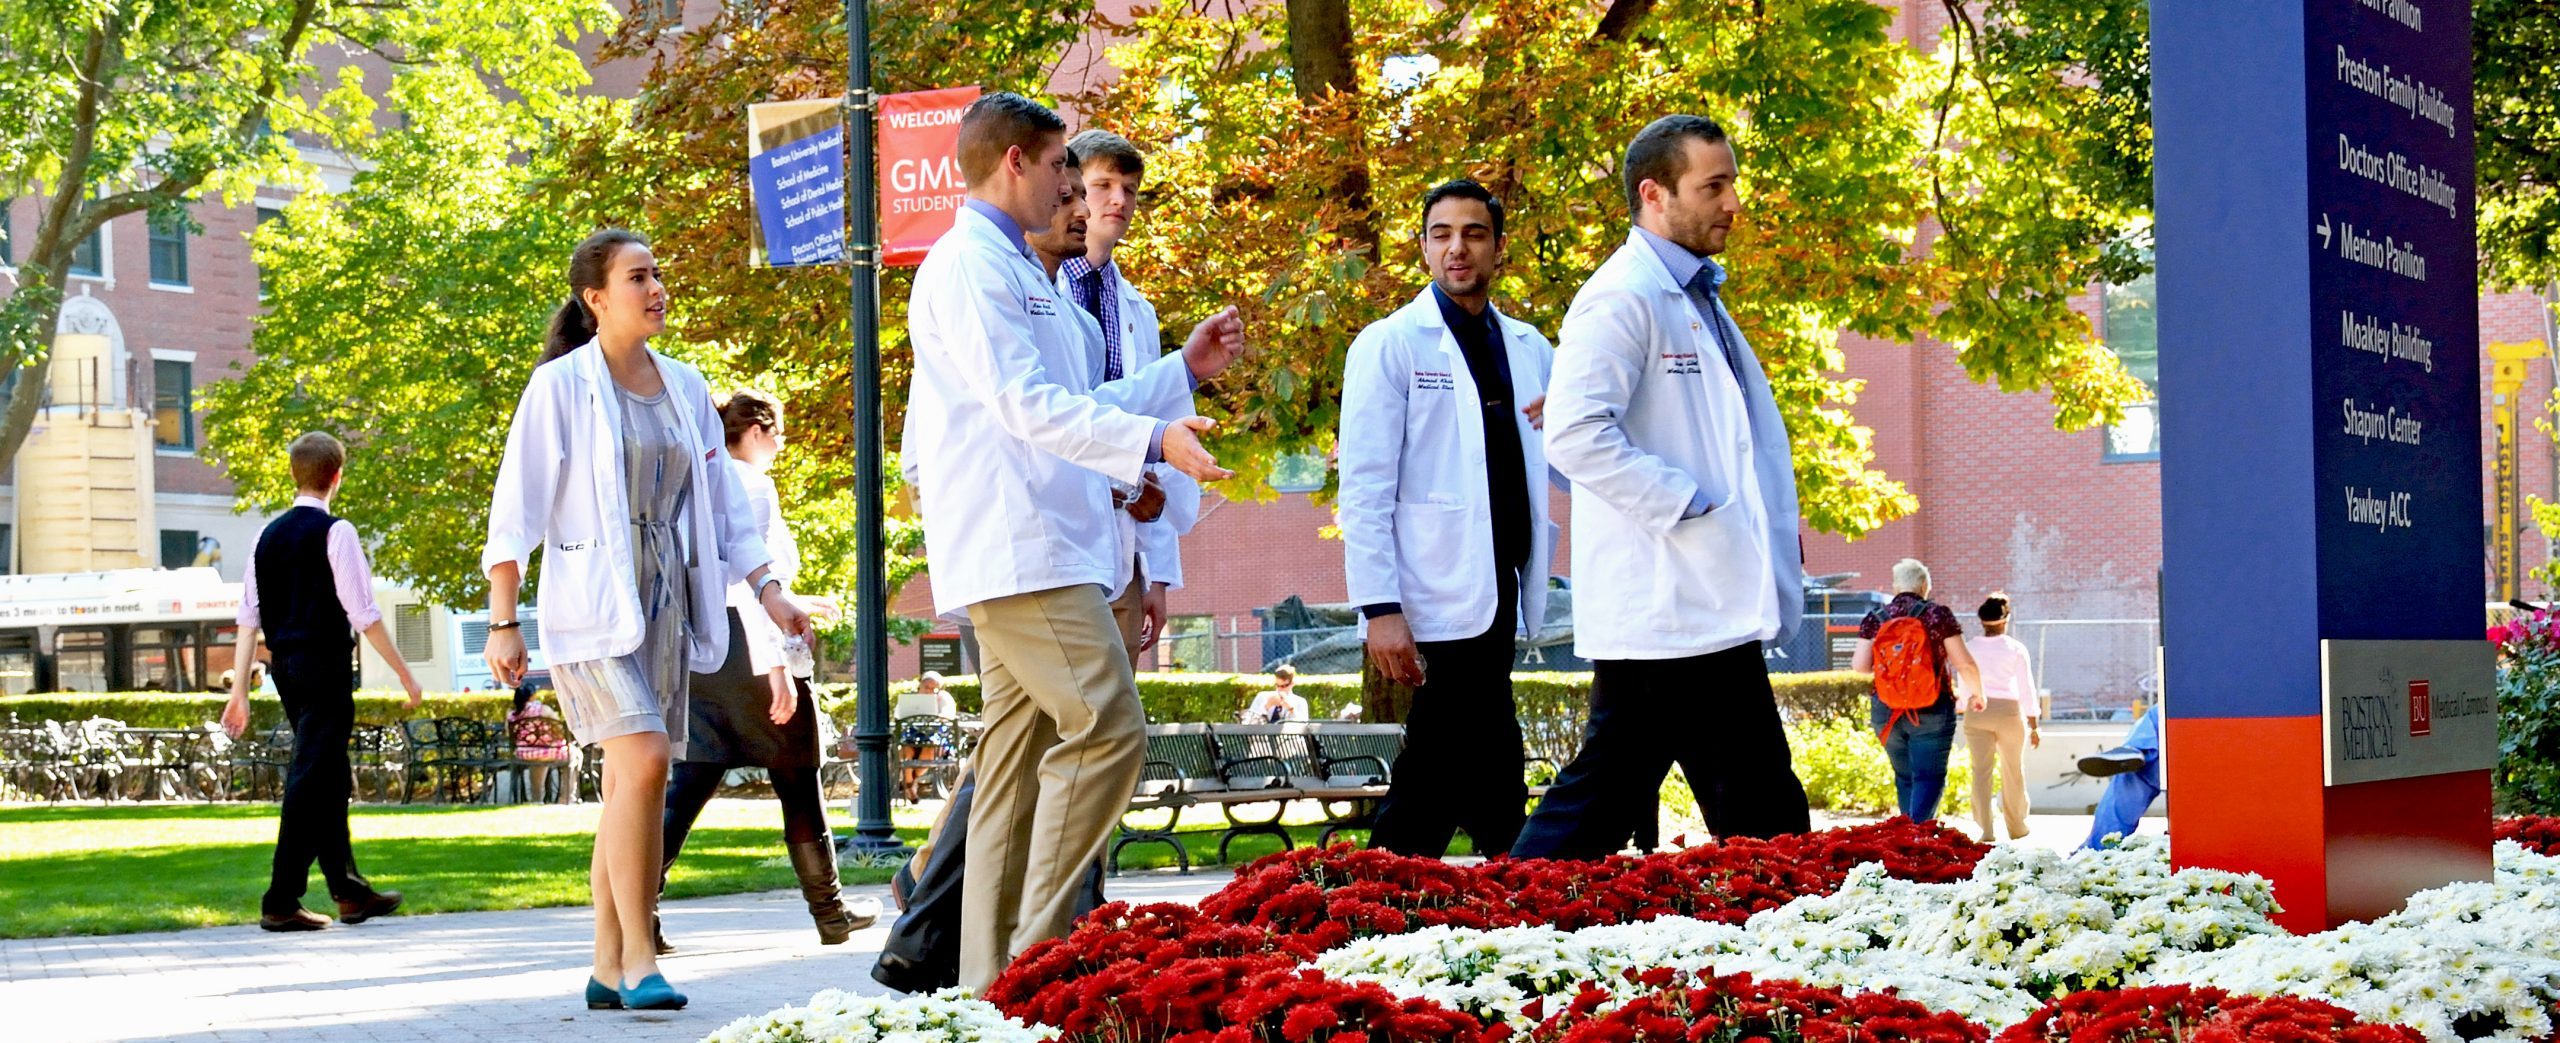 Medical students walking without masks